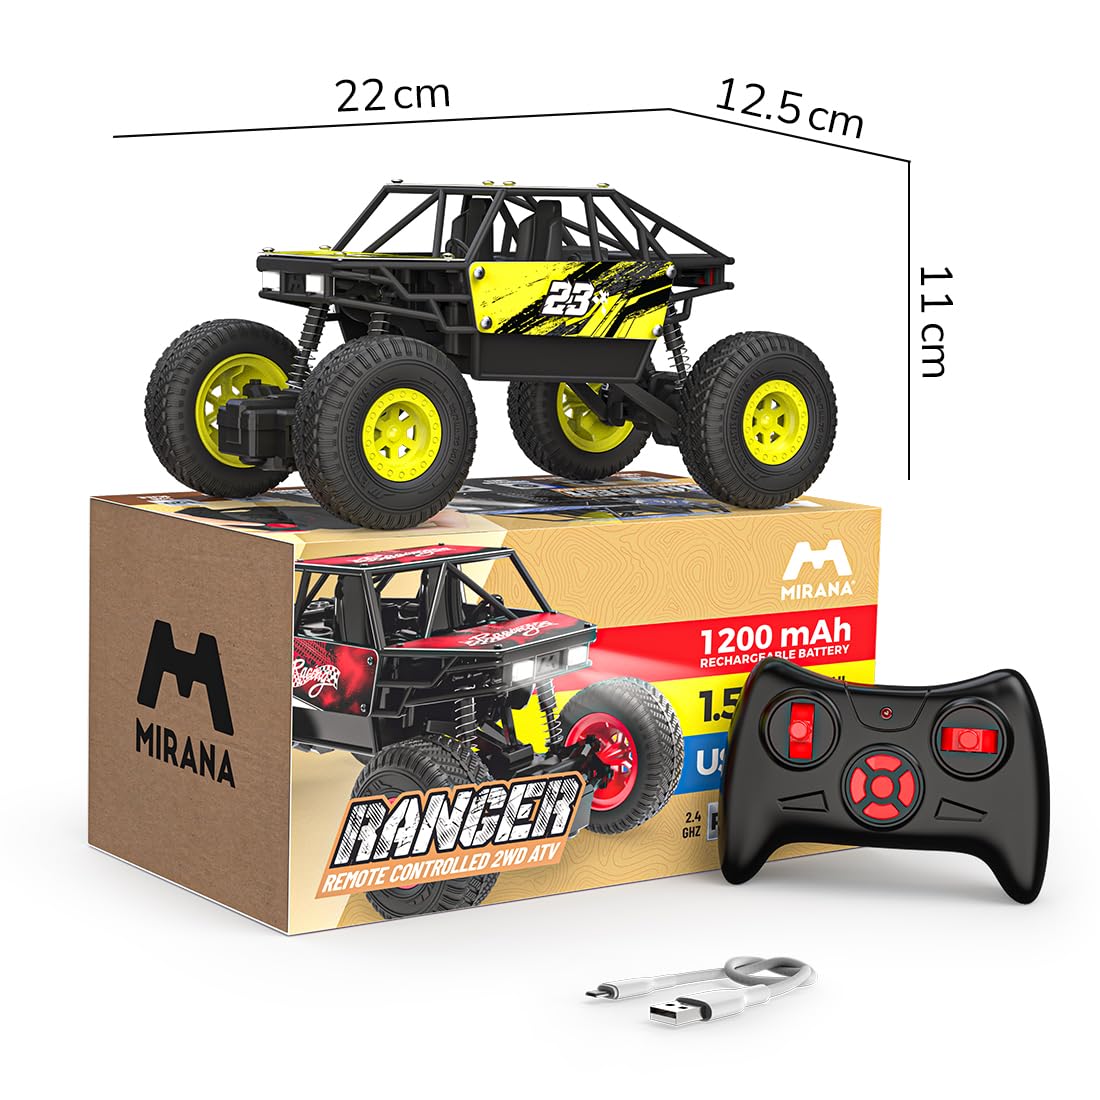 Mirana Ranger Remote Control Car 2WD ATV